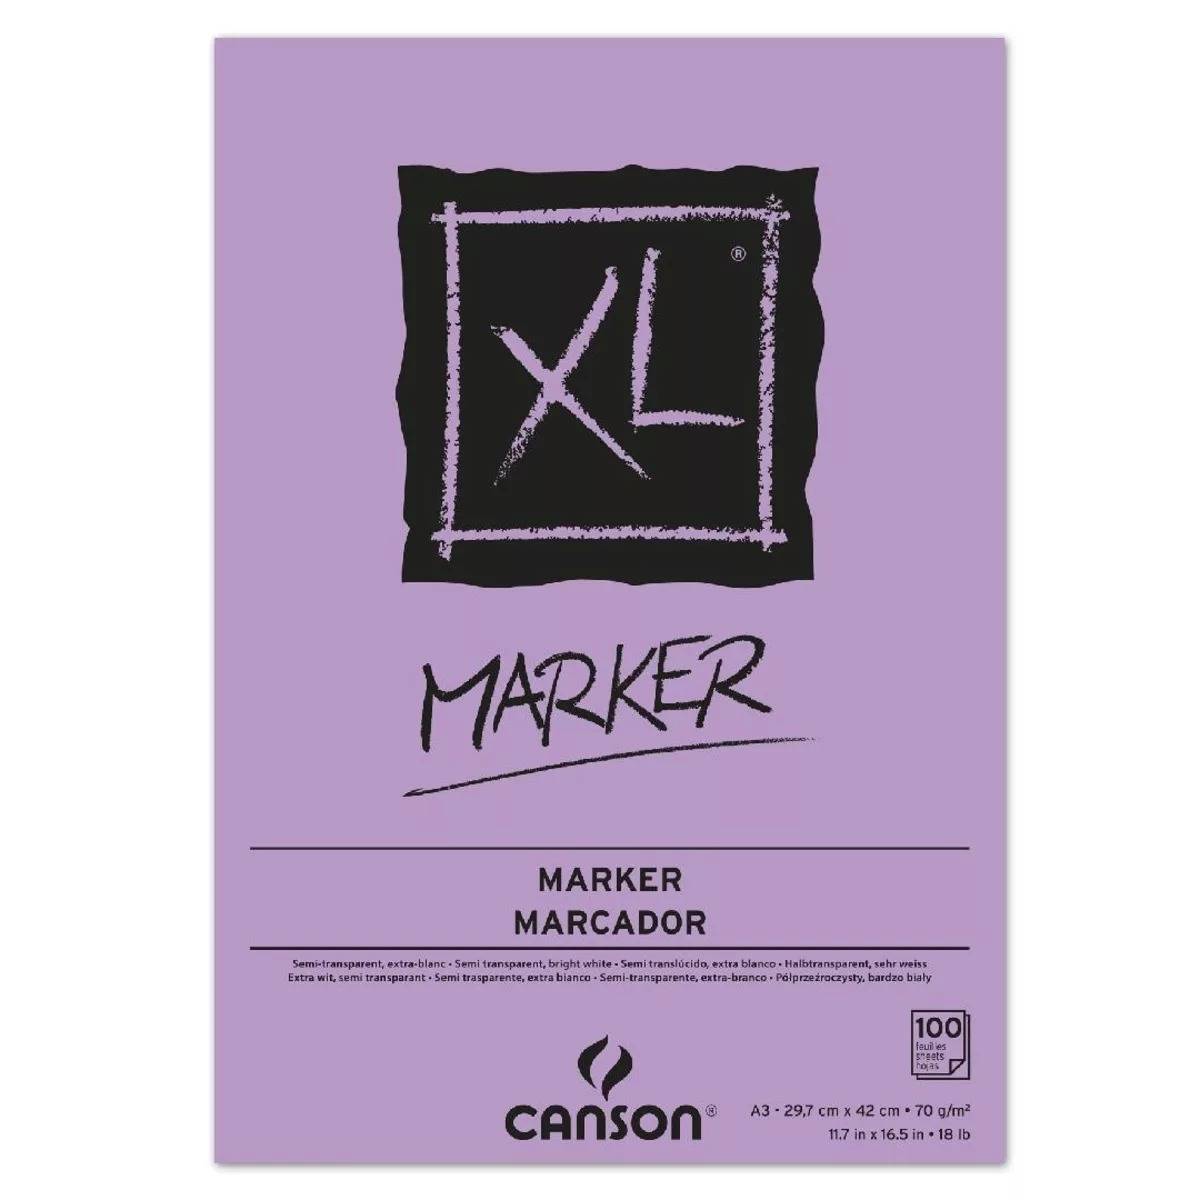 Альбом маркер. Canson бумага для маркеров. Альбом для маркеров Canson XL Marker 42 х 29.7 см (a3), 70 г/м², 100 л.. Блокнот XL Canson. Альбом Canson.